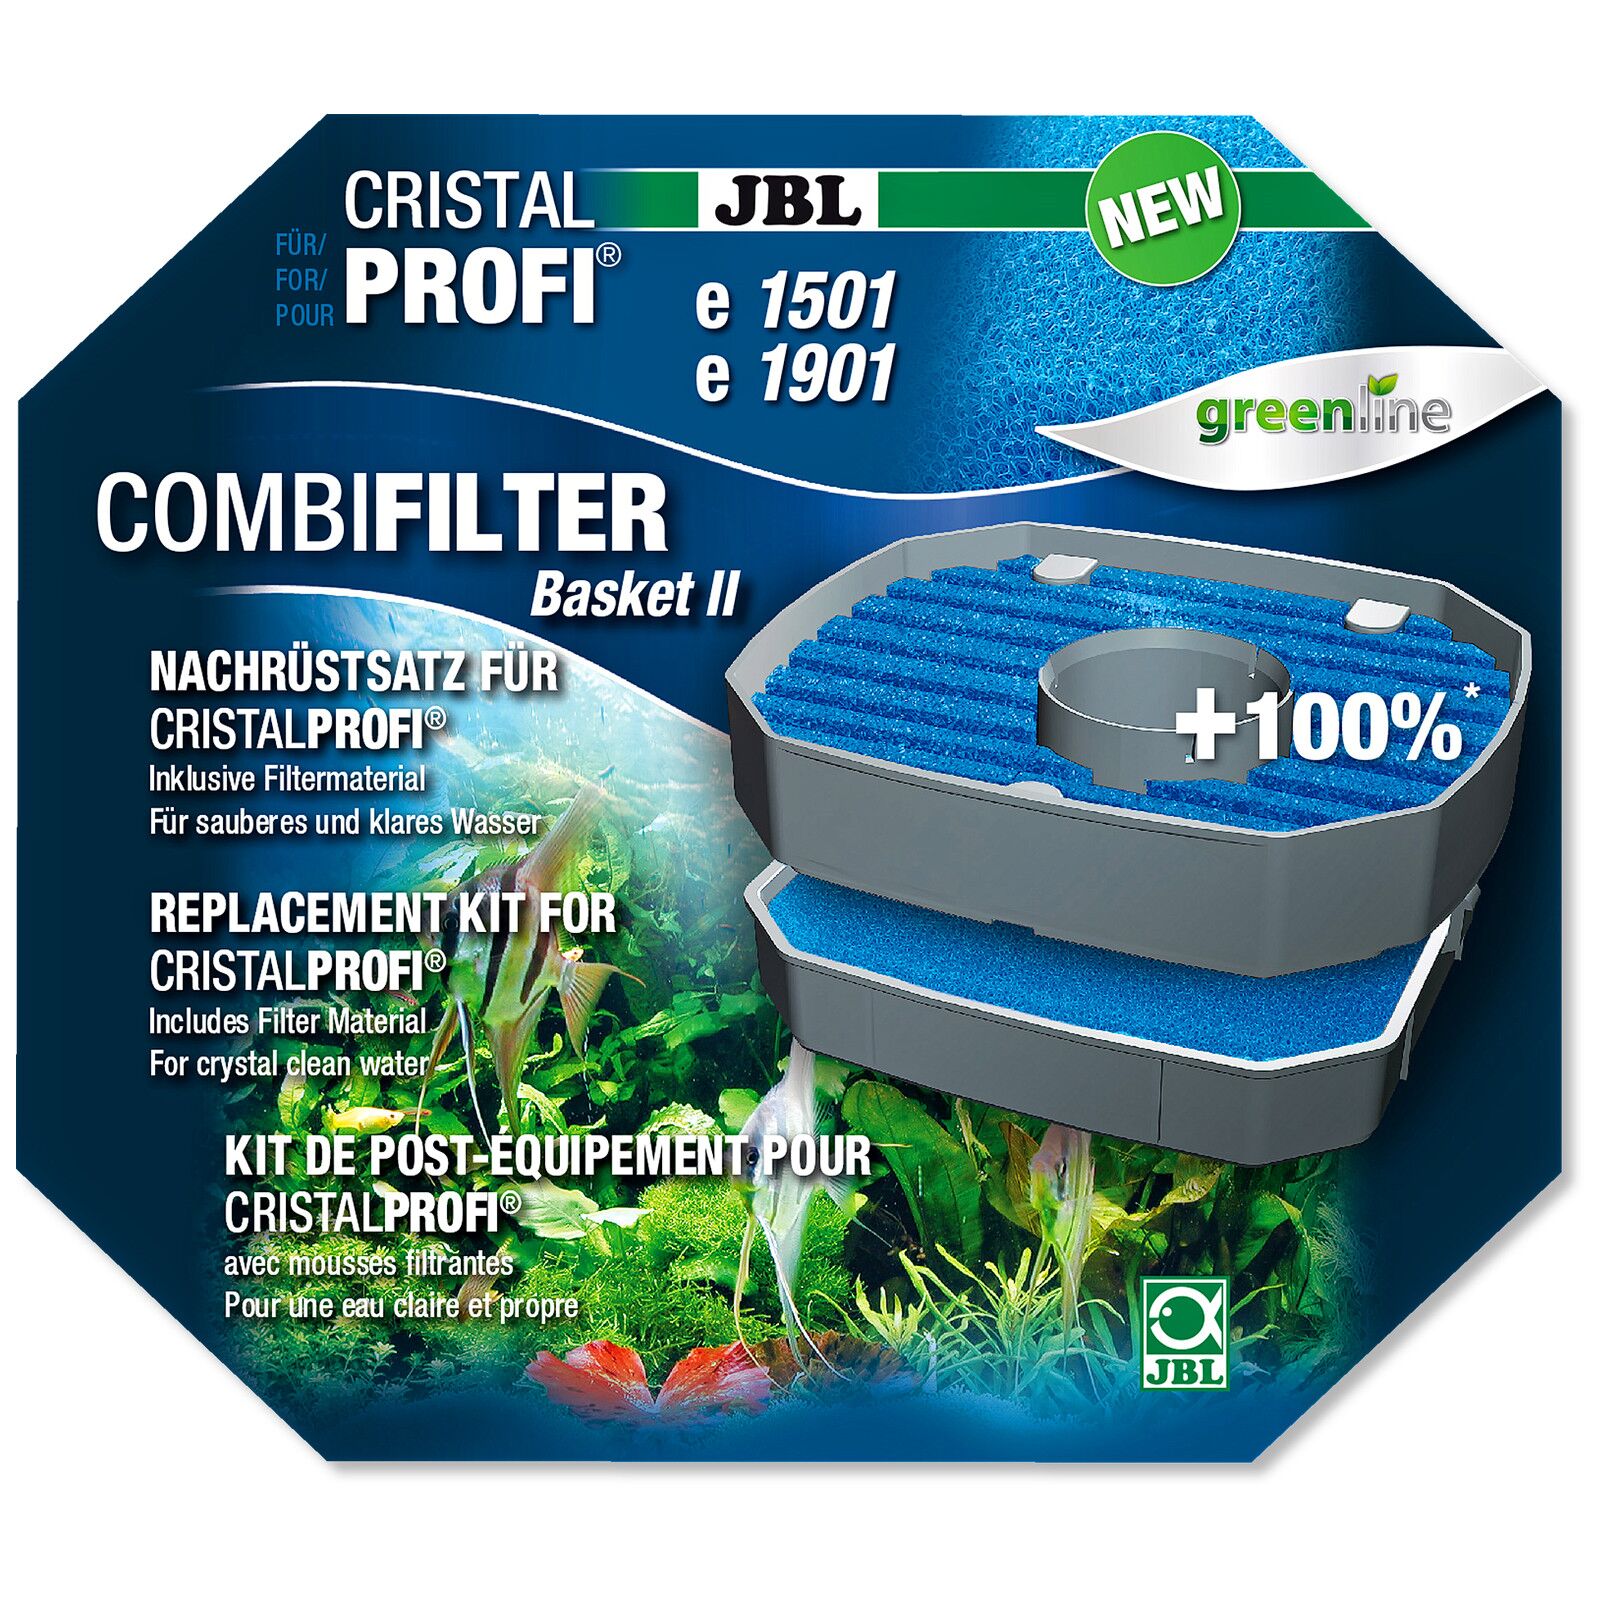 JBL - Combi Filter Basket II - CristalProfi